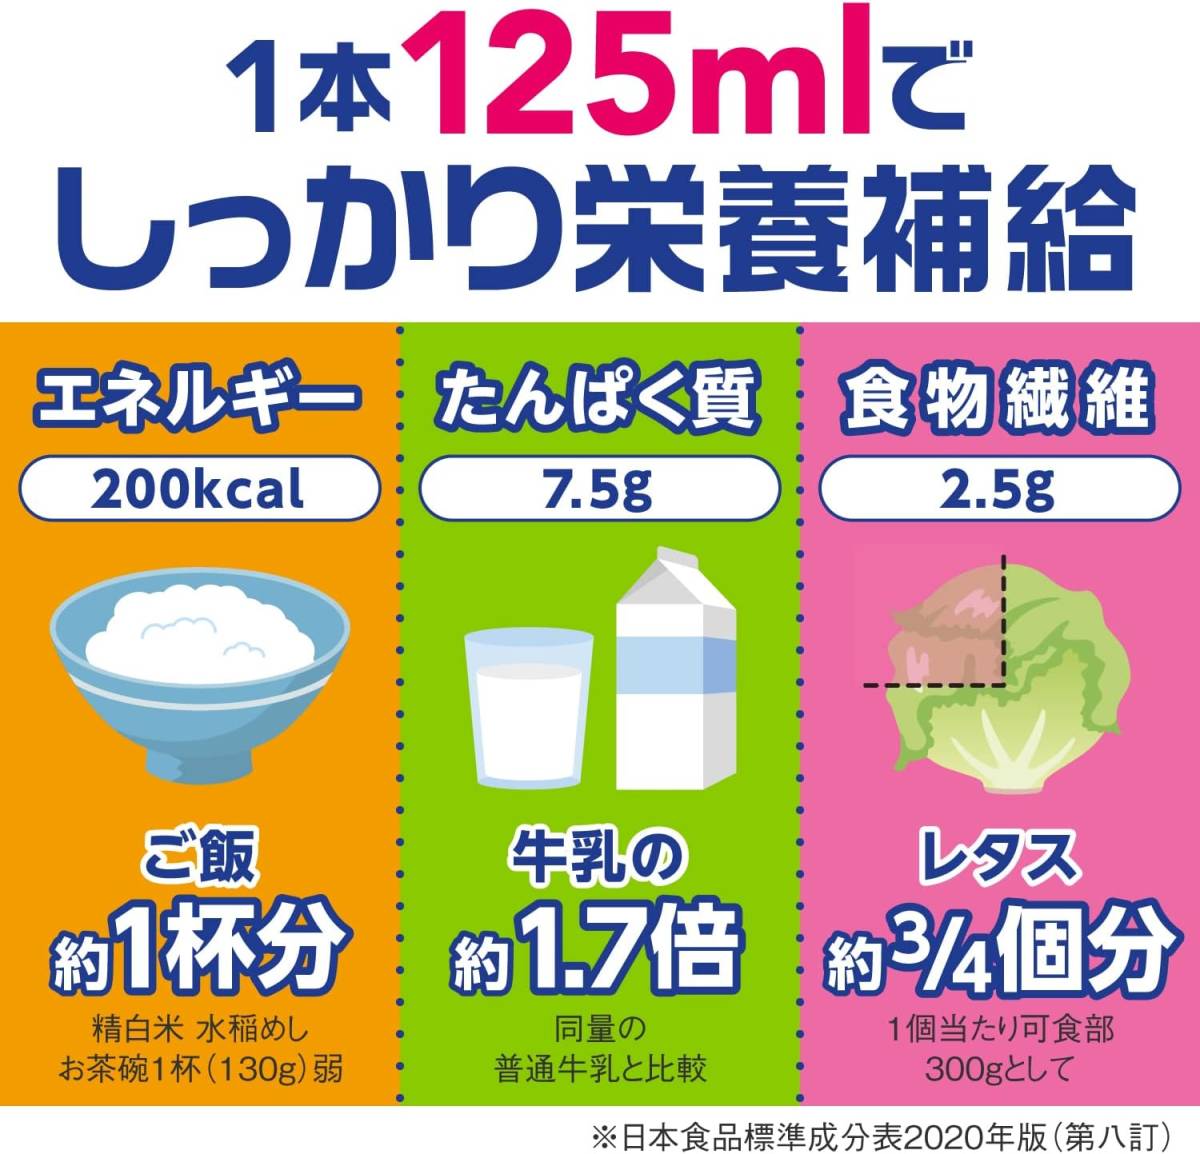 mei balance Mini assortment BOX 125ml×1 2 ps (3 kind × each 4ps.@) nutrition function food Meiji 